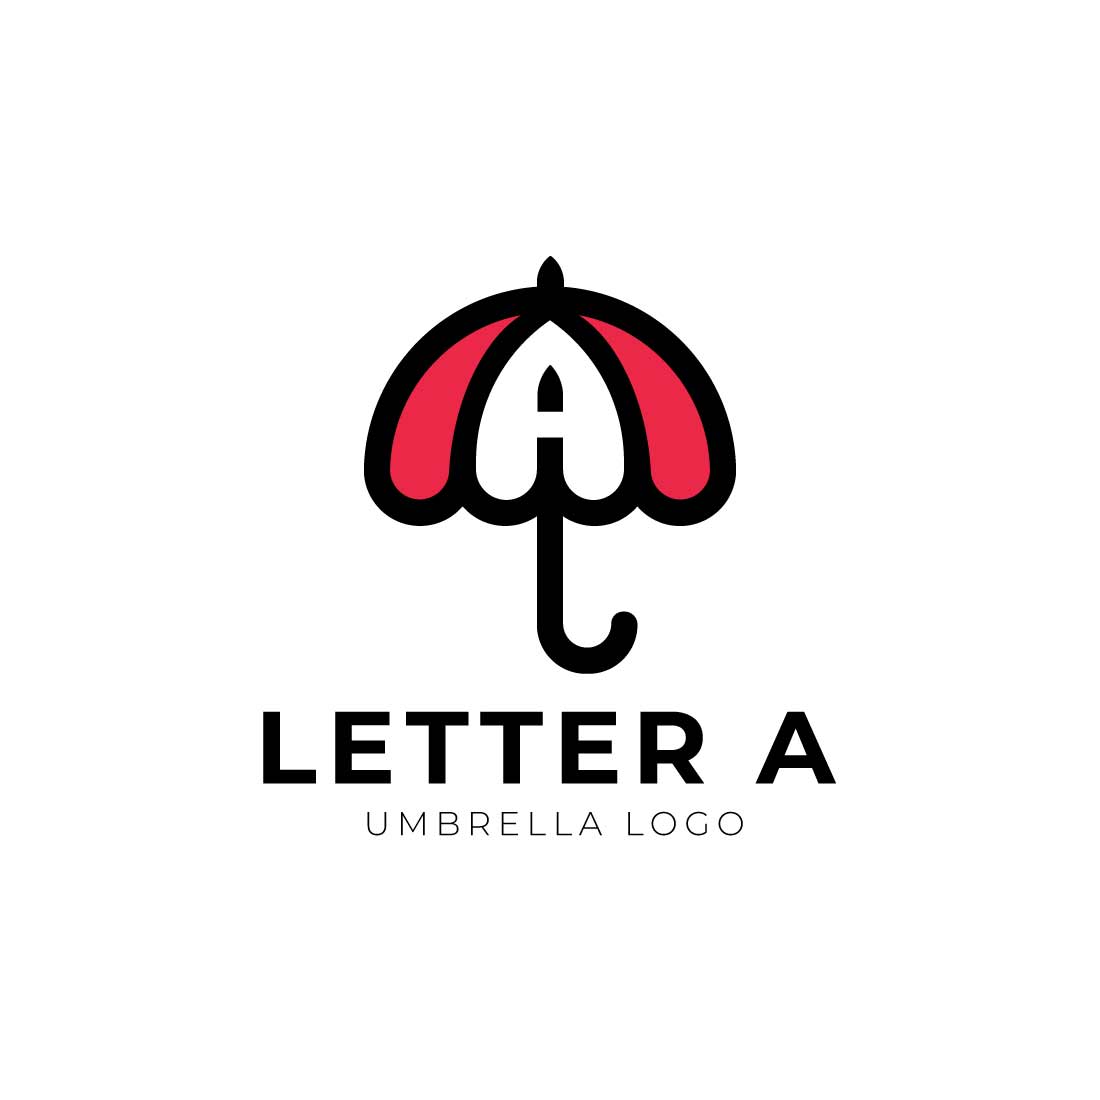 Professional Letter A Umbrella Logo design preview image.